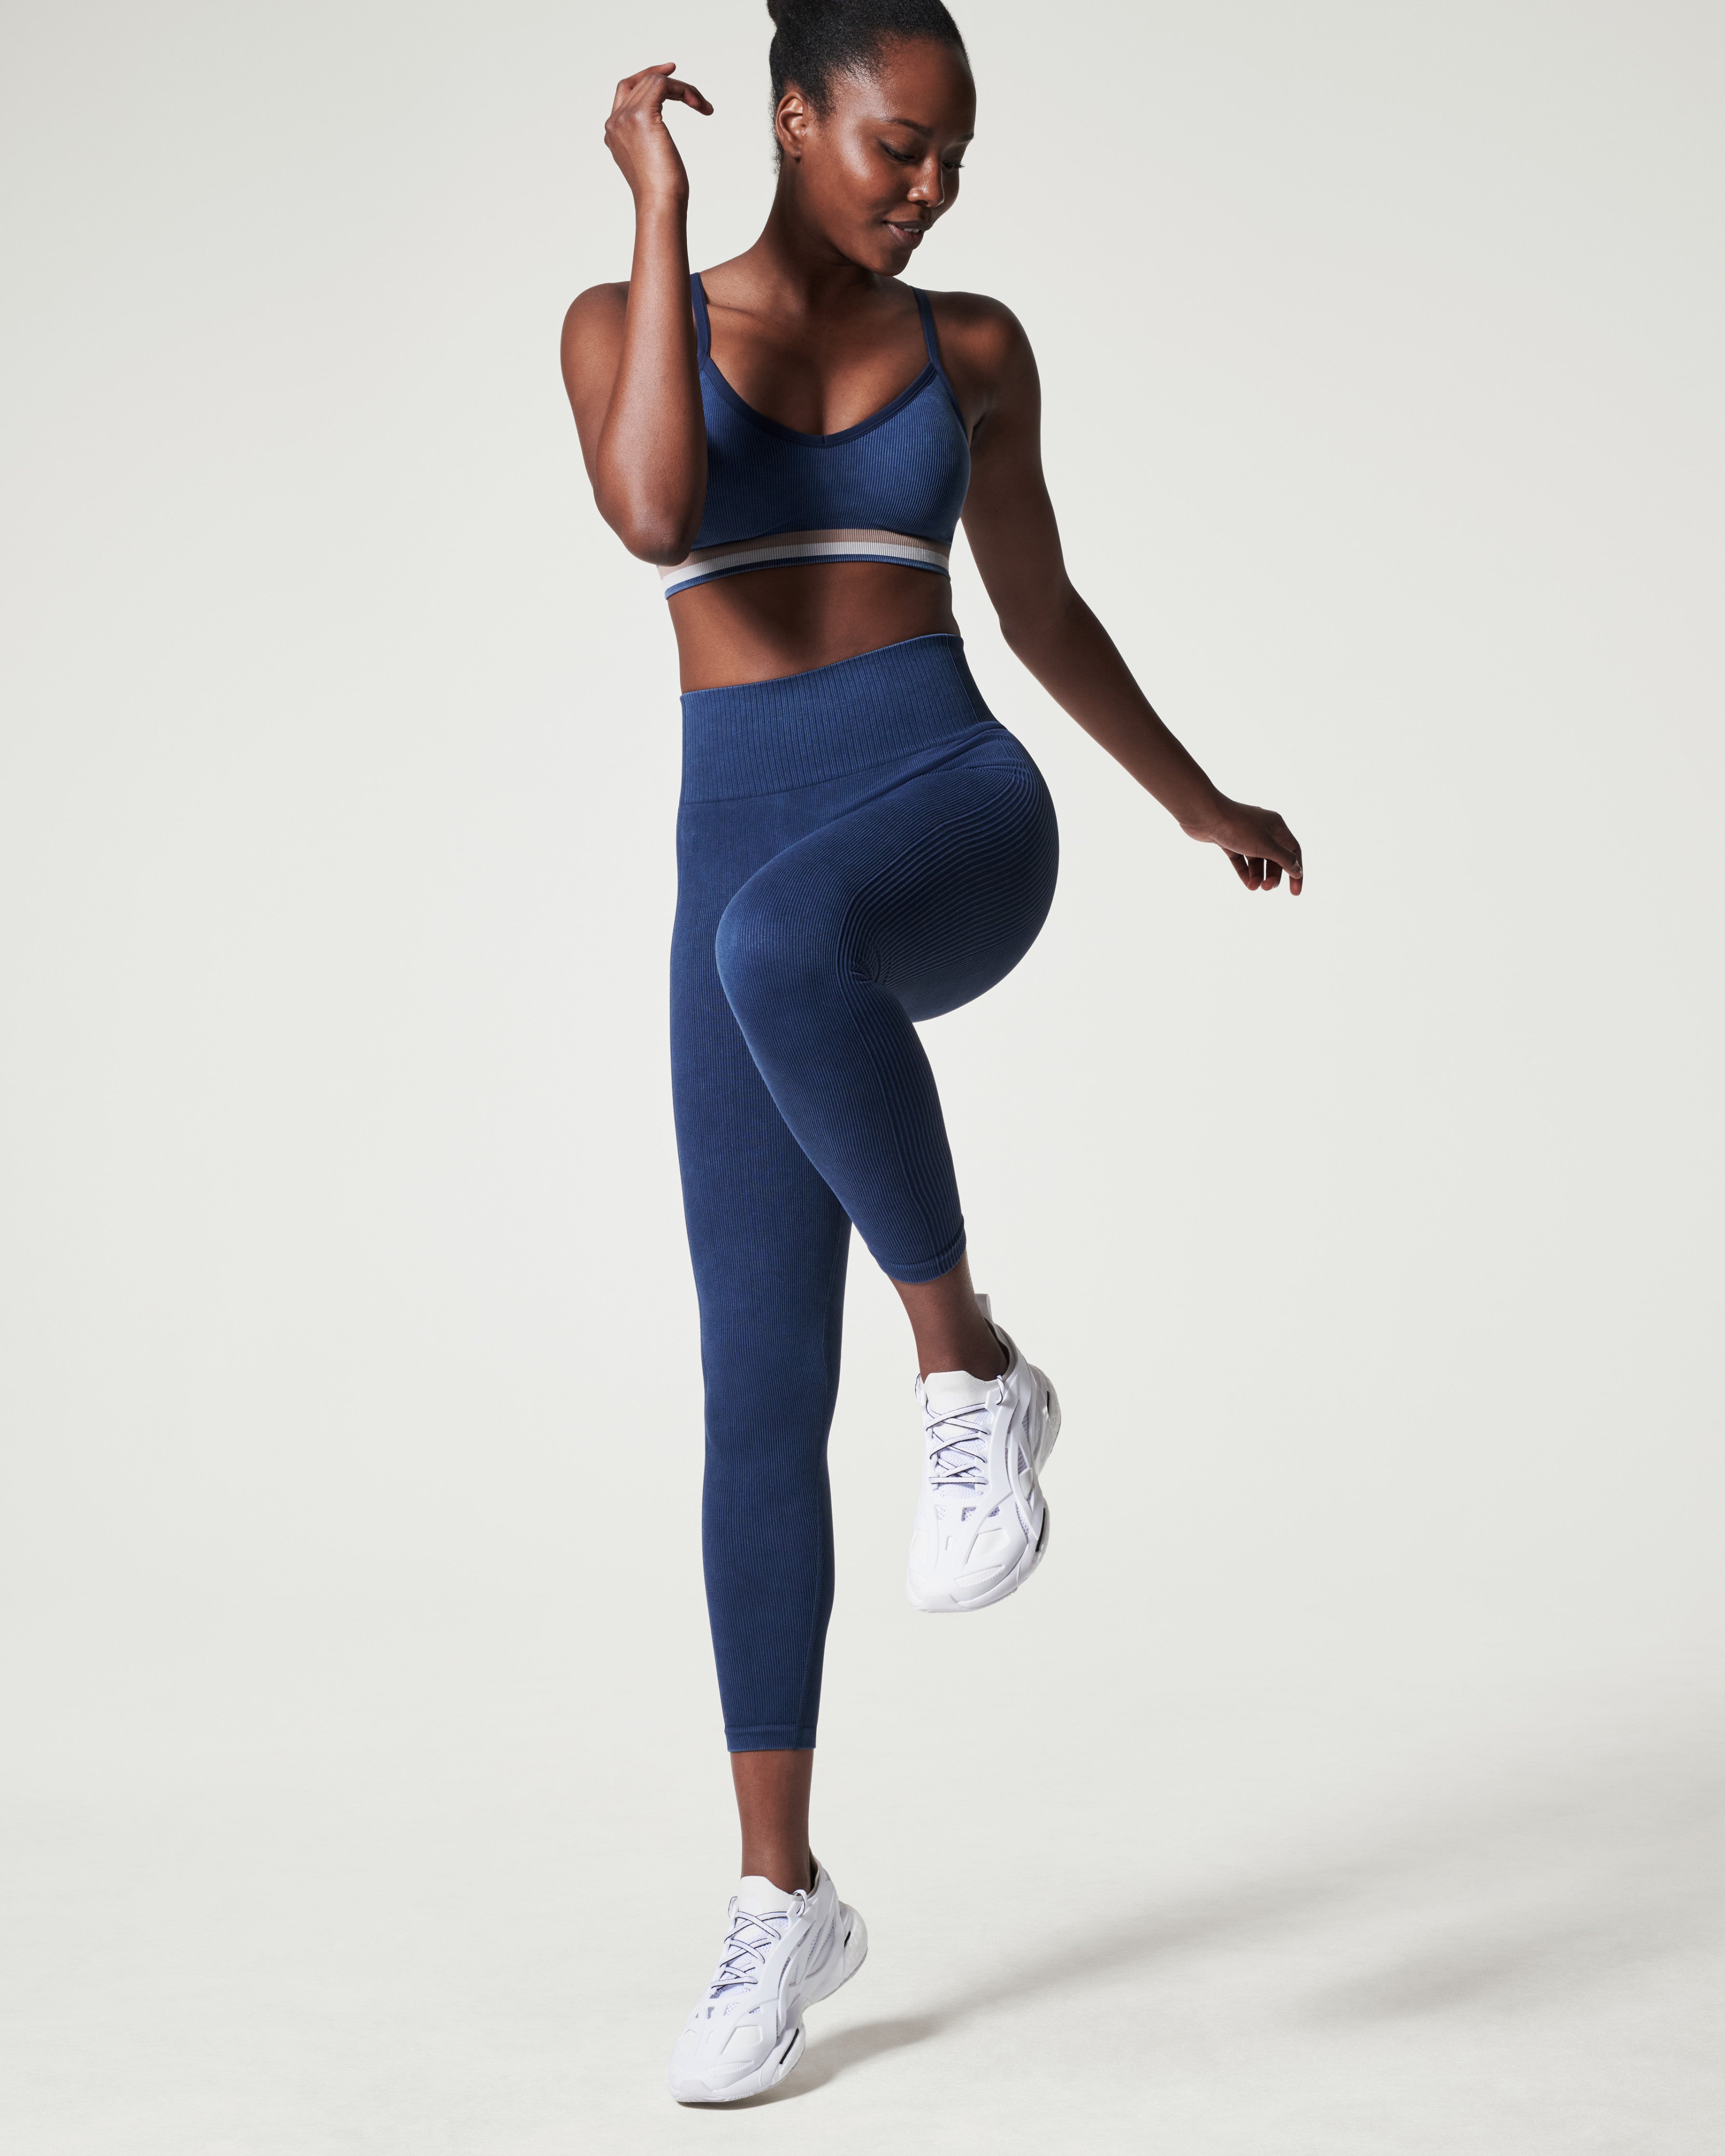 Nike One Performance Leggings Dri-fit Petrol Blue Leggings with